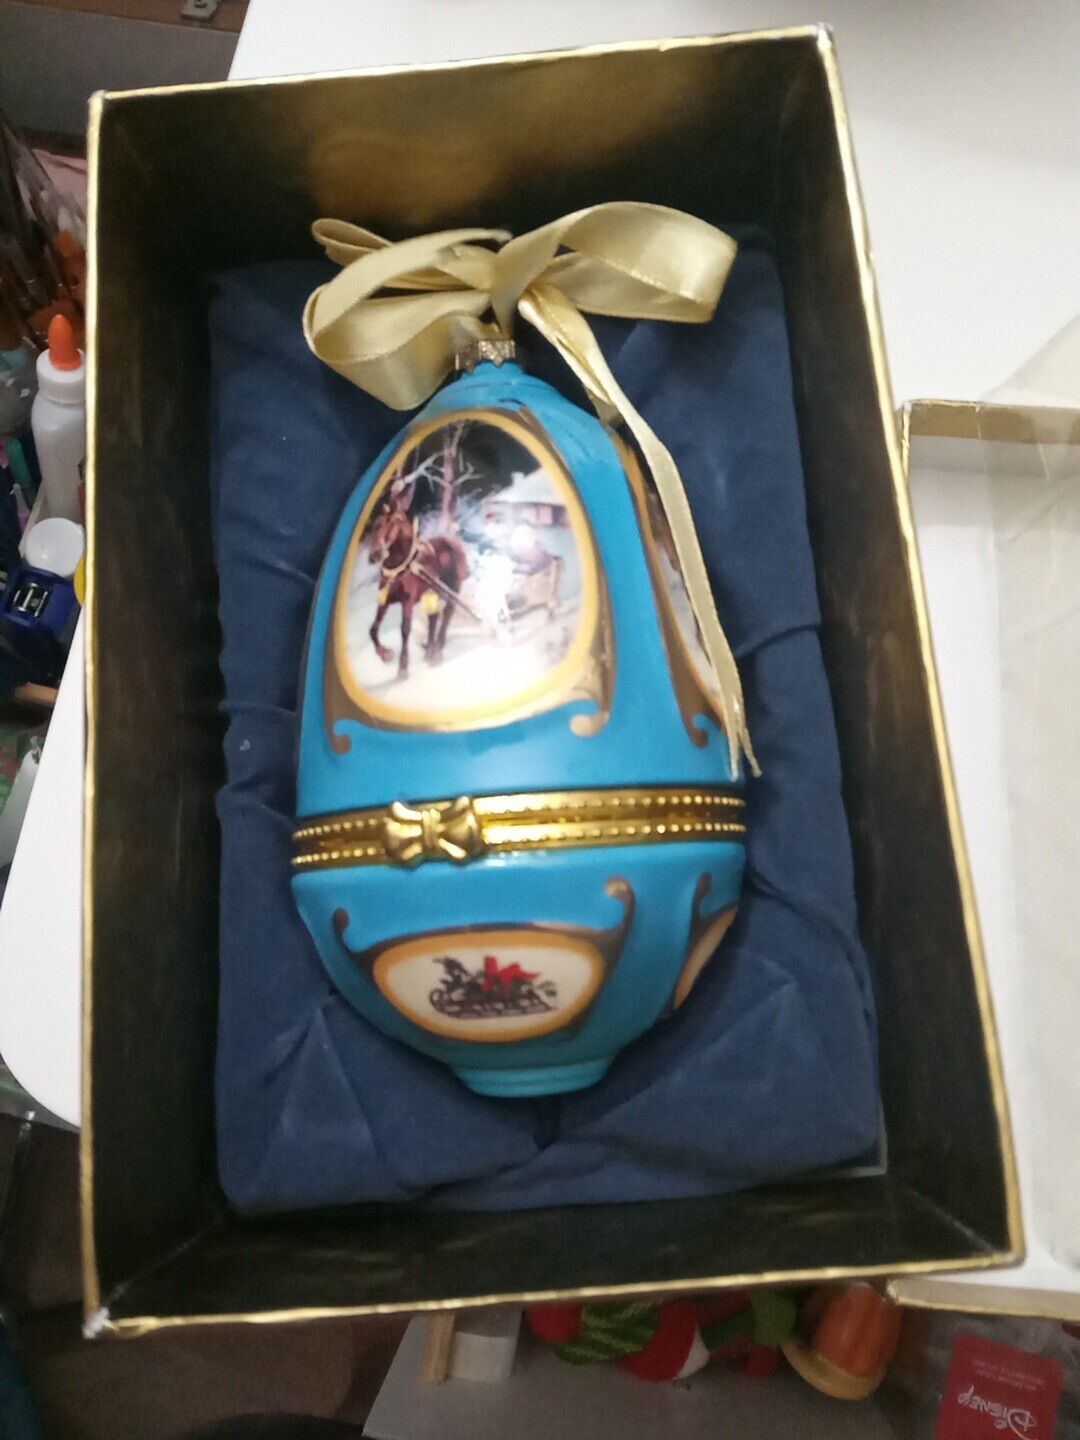 Mr Christmas Musical Egg Ornament Trinket Box - Blue/Gold - Valerie Parr Hill